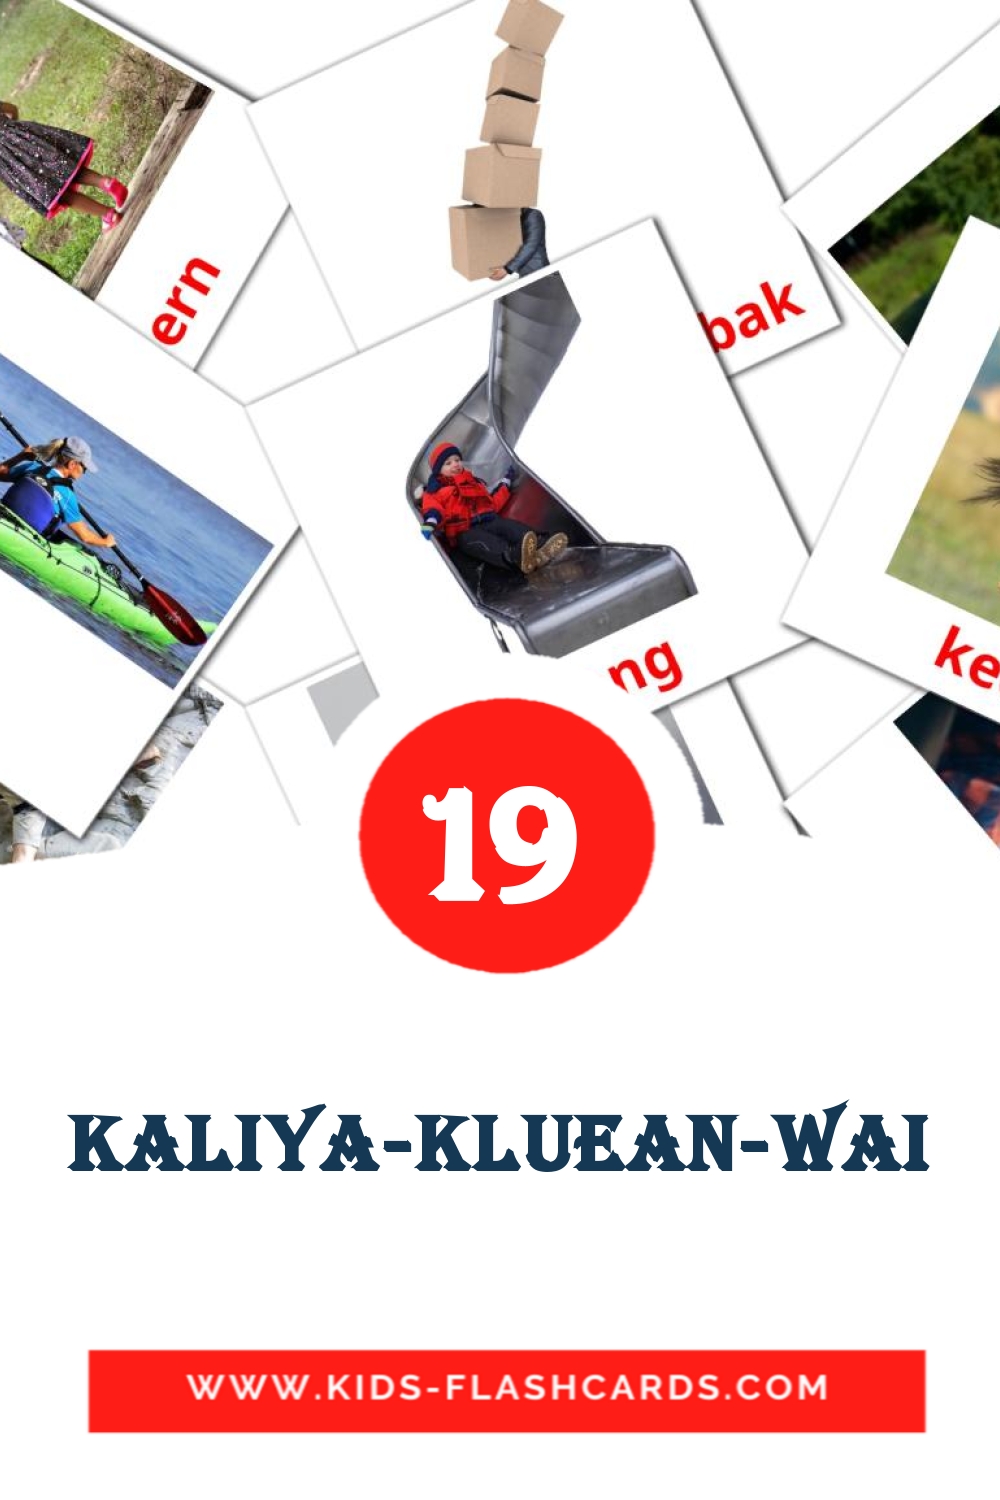 Kaliya-kluean-wai на амхарском для Детского Сада (19 карточек)